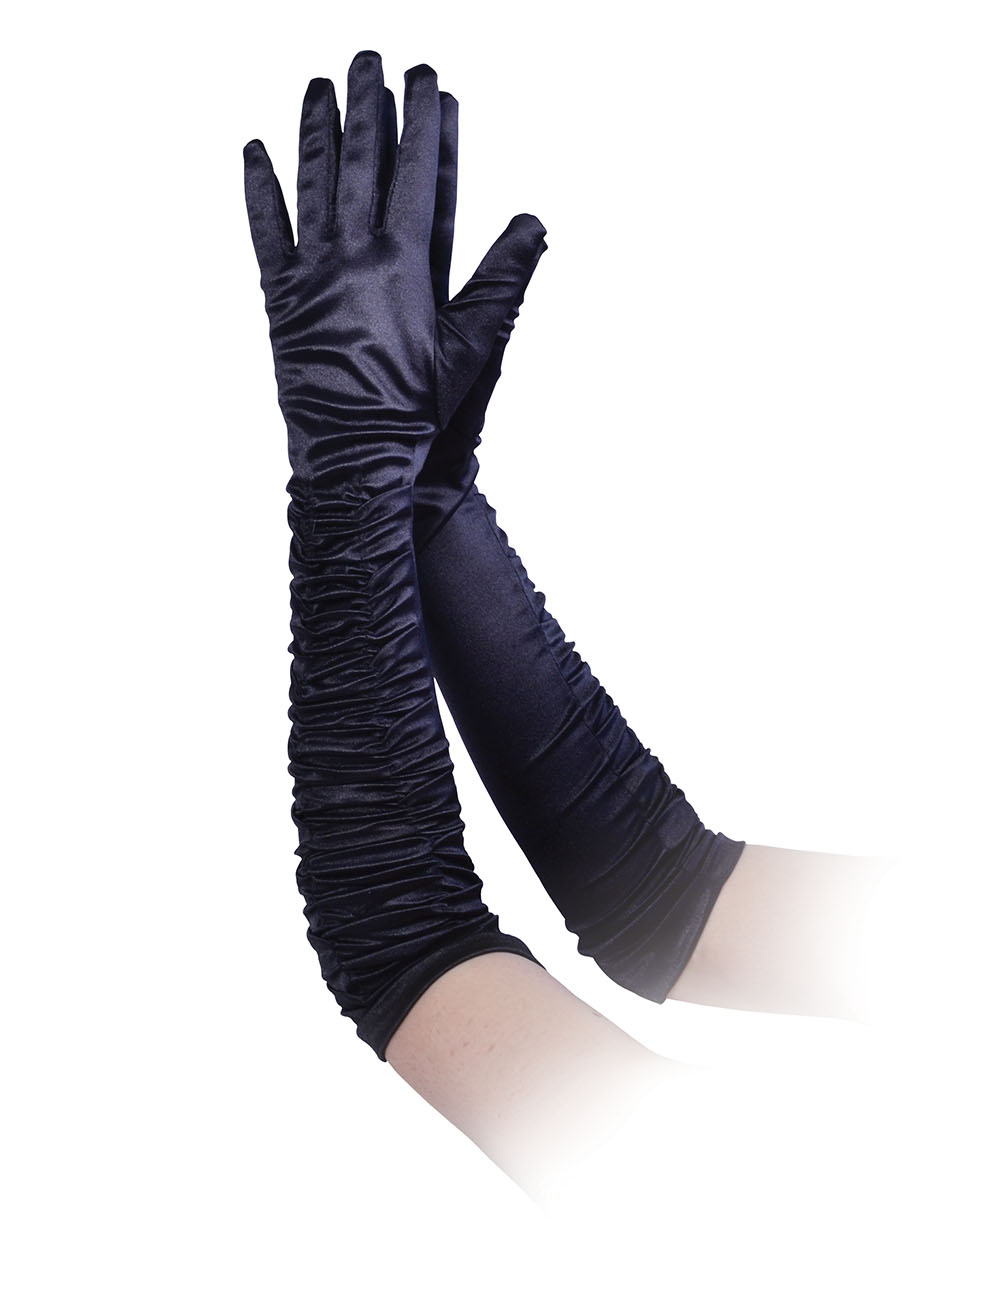 Gloves. Black Satin Theatrical